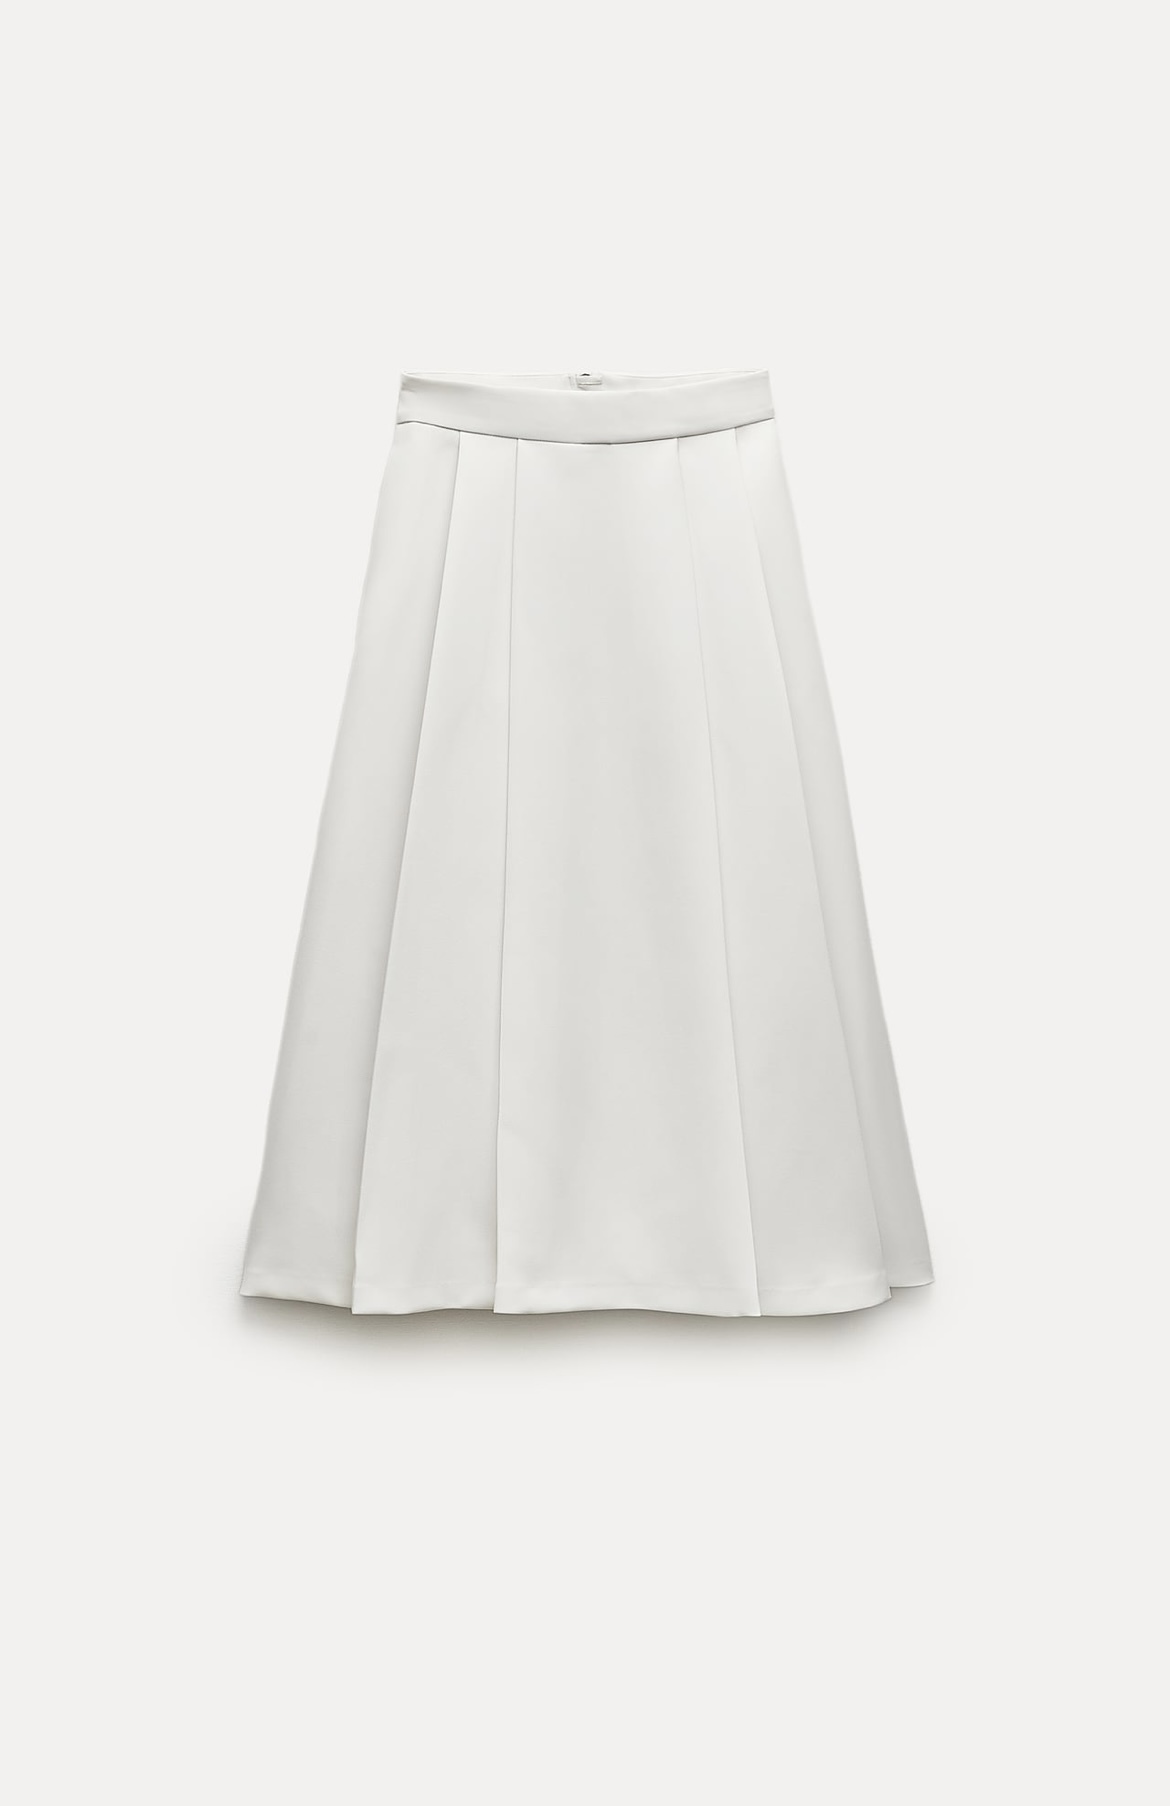 Falda midi plisada en corte ancho de Zara (69,95 euros)